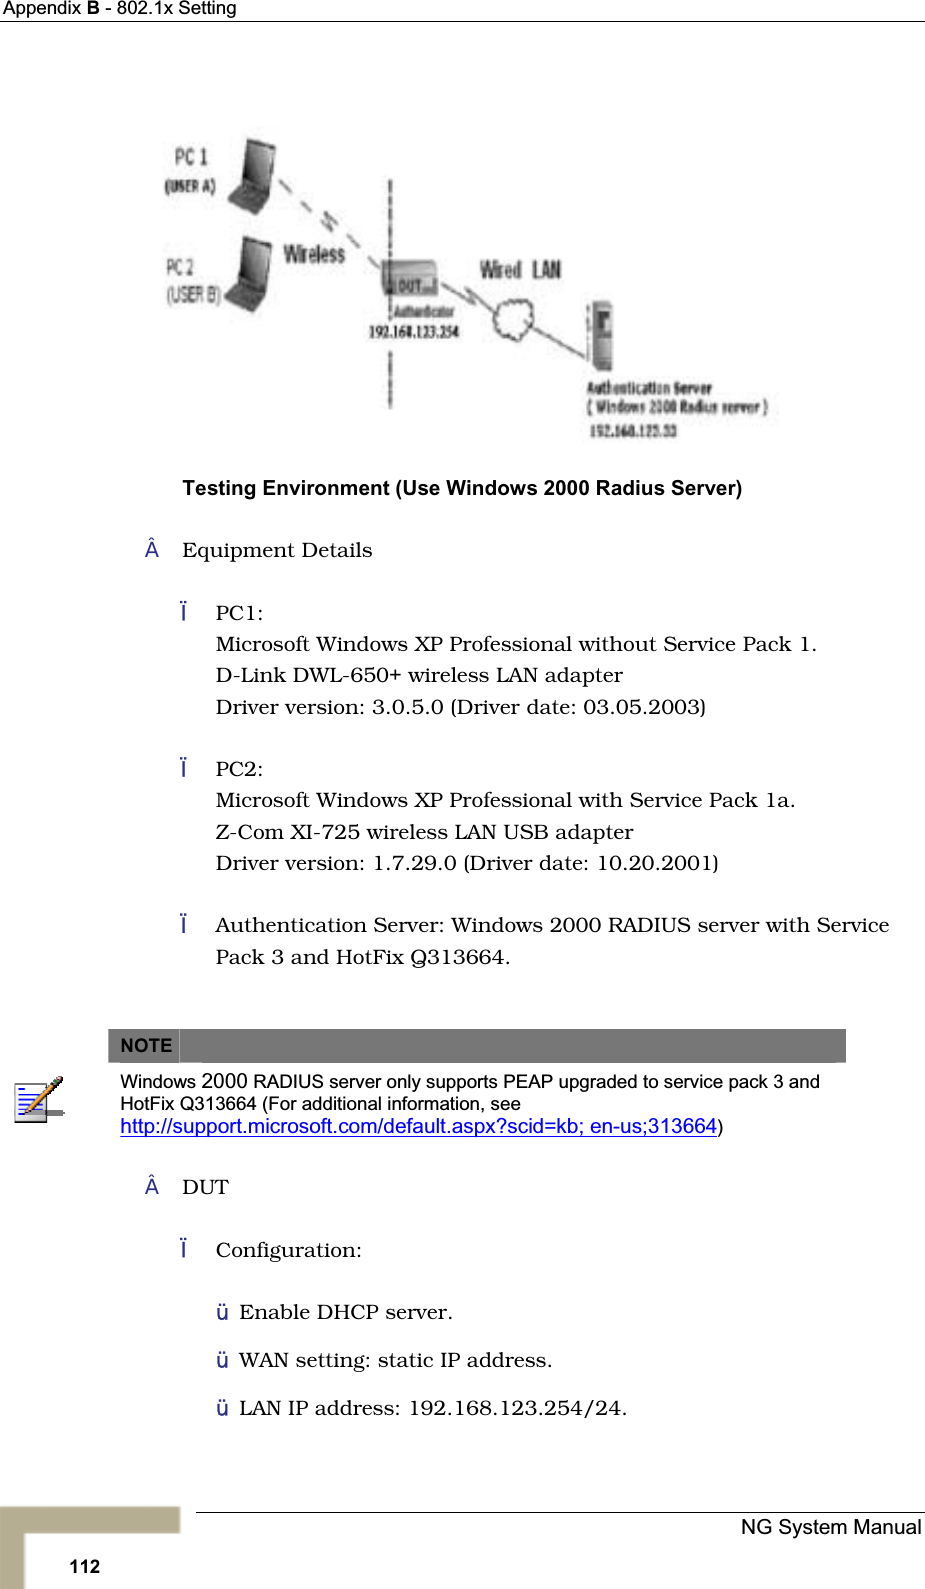 Appendix B - 802.1x SettingTesting Environment (Use Windows 2000 Radius Server)Equipment DetailsPC1:Microsoft Windows XP Professional without Service Pack 1.D-Link DWL-650+ wireless LAN adapterDriver version: 3.0.5.0 (Driver date: 03.05.2003)PC2:Microsoft Windows XP Professional with Service Pack 1a. Z-Com XI-725 wireless LAN USB adapterDriver version: 1.7.29.0 (Driver date: 10.20.2001)Authentication Server: Windows 2000 RADIUS server with ServicePack 3 and HotFix Q313664.NOTEWindows 2000 RADIUS server only supports PEAP upgraded to service pack 3 and HotFix Q313664 (For additional information, seehttp://support.microsoft.com/default.aspx?scid=kb; en-us;313664)DUTConfiguration:¾Enable DHCP server.¾WAN setting: static IP address.¾LAN IP address: 192.168.123.254/24.NG System Manual112